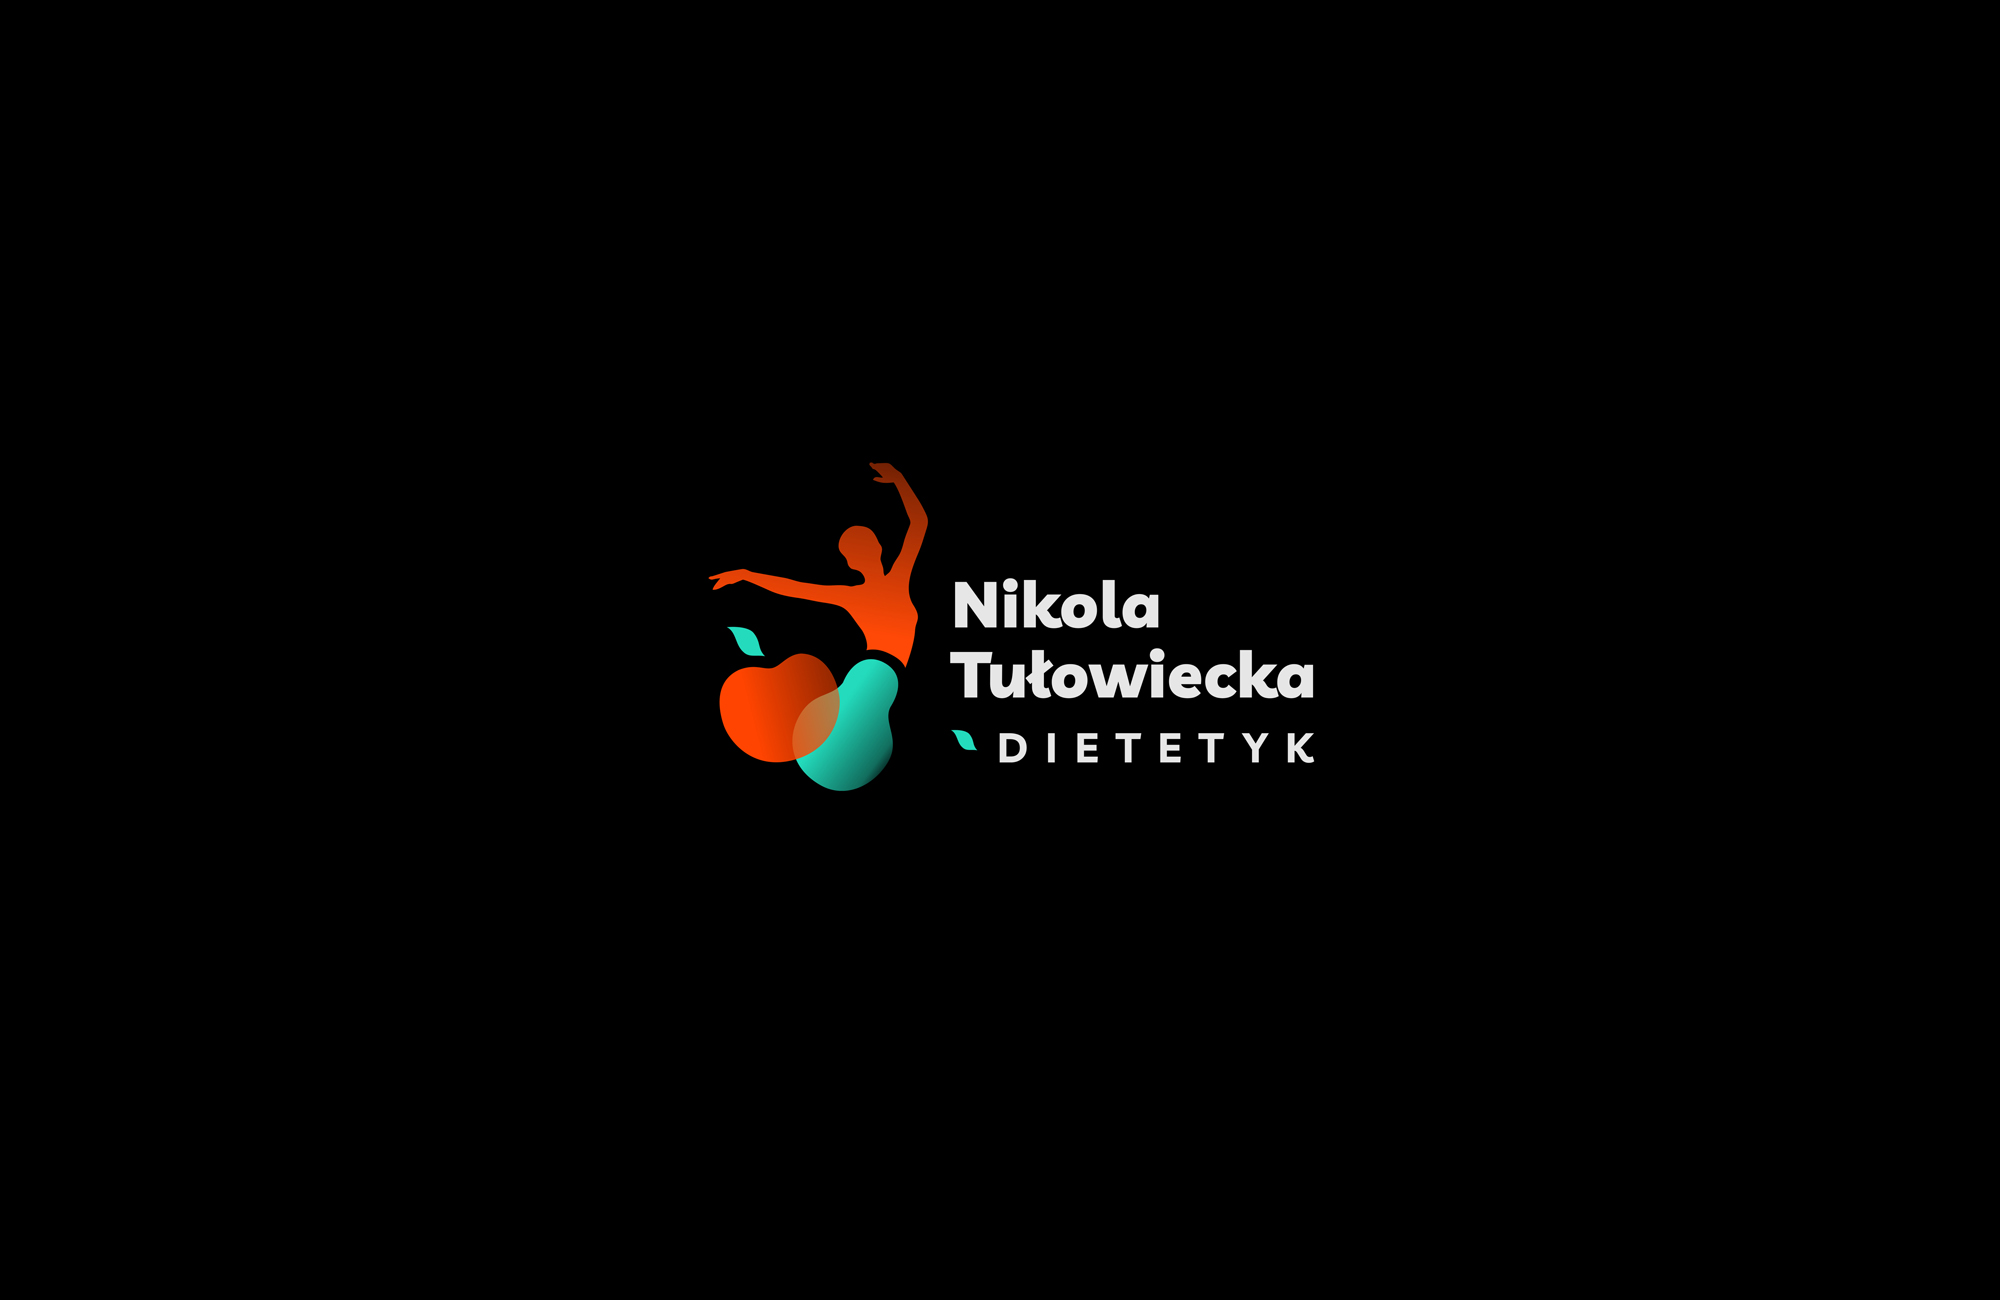 Nikola Tulowiecka - Dietetyk - Szczecin. Shadowart - logo, vouchery.